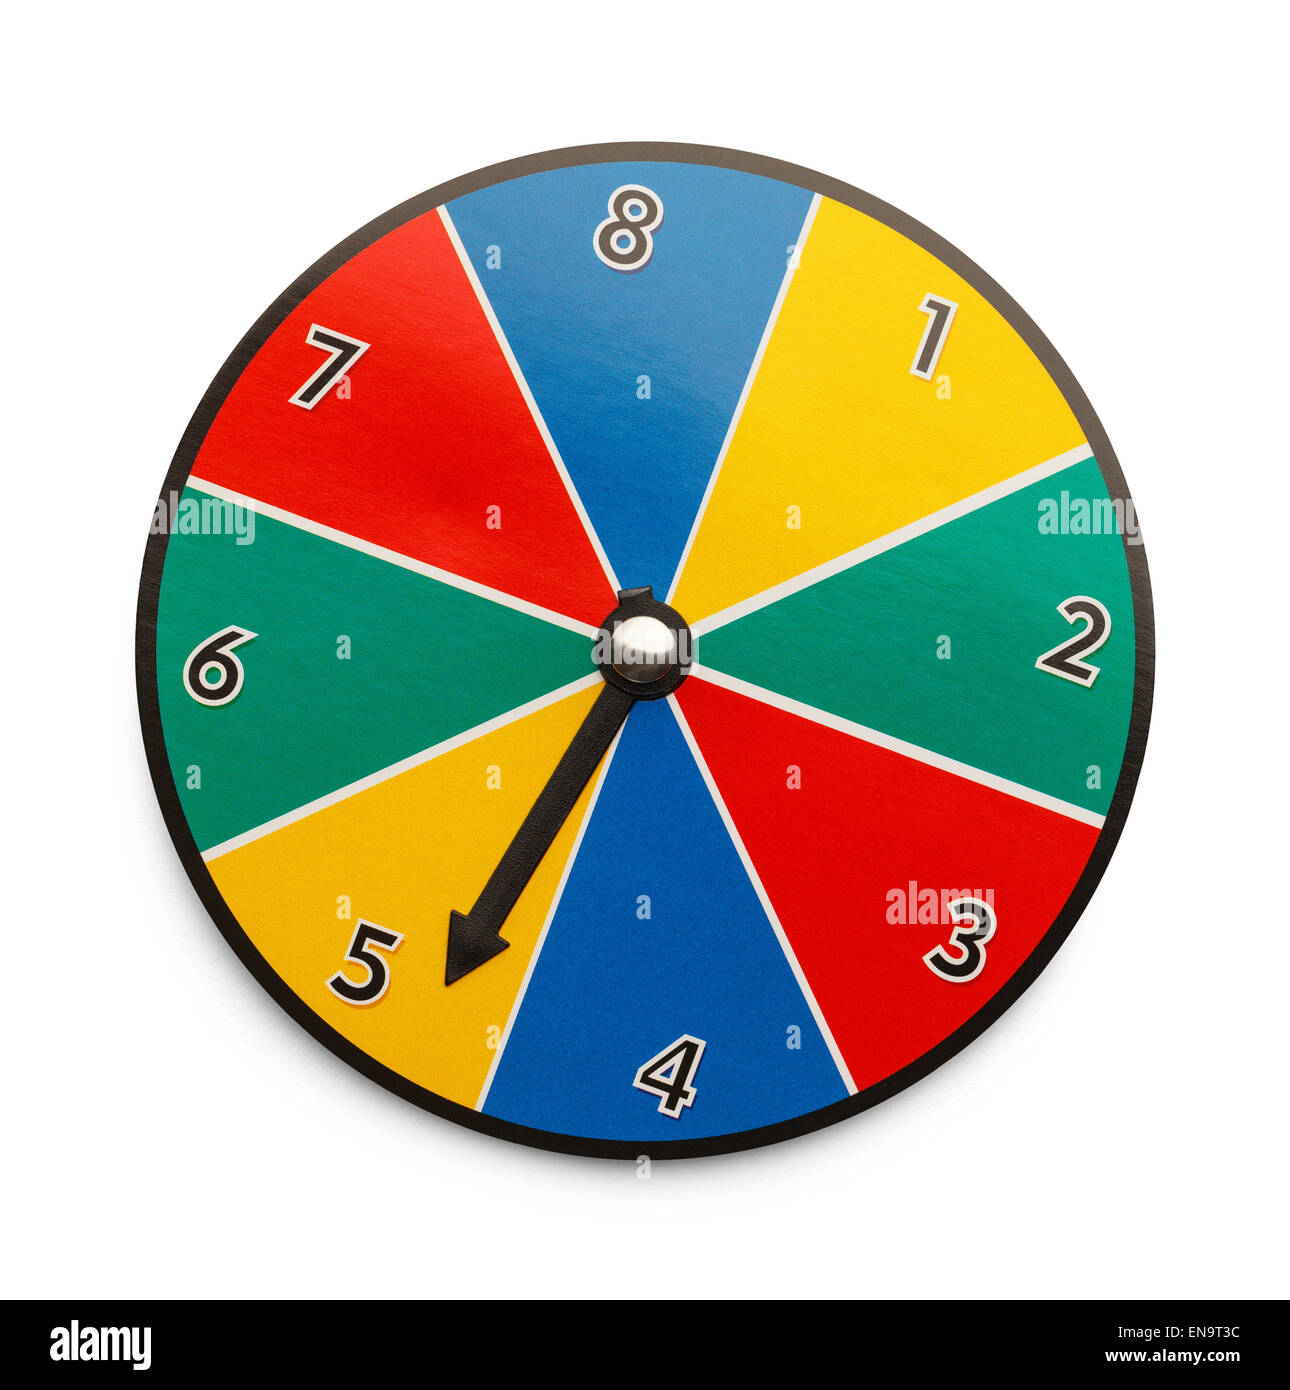 Spinning Game Wheel Isolated on White Background. Stock Photo